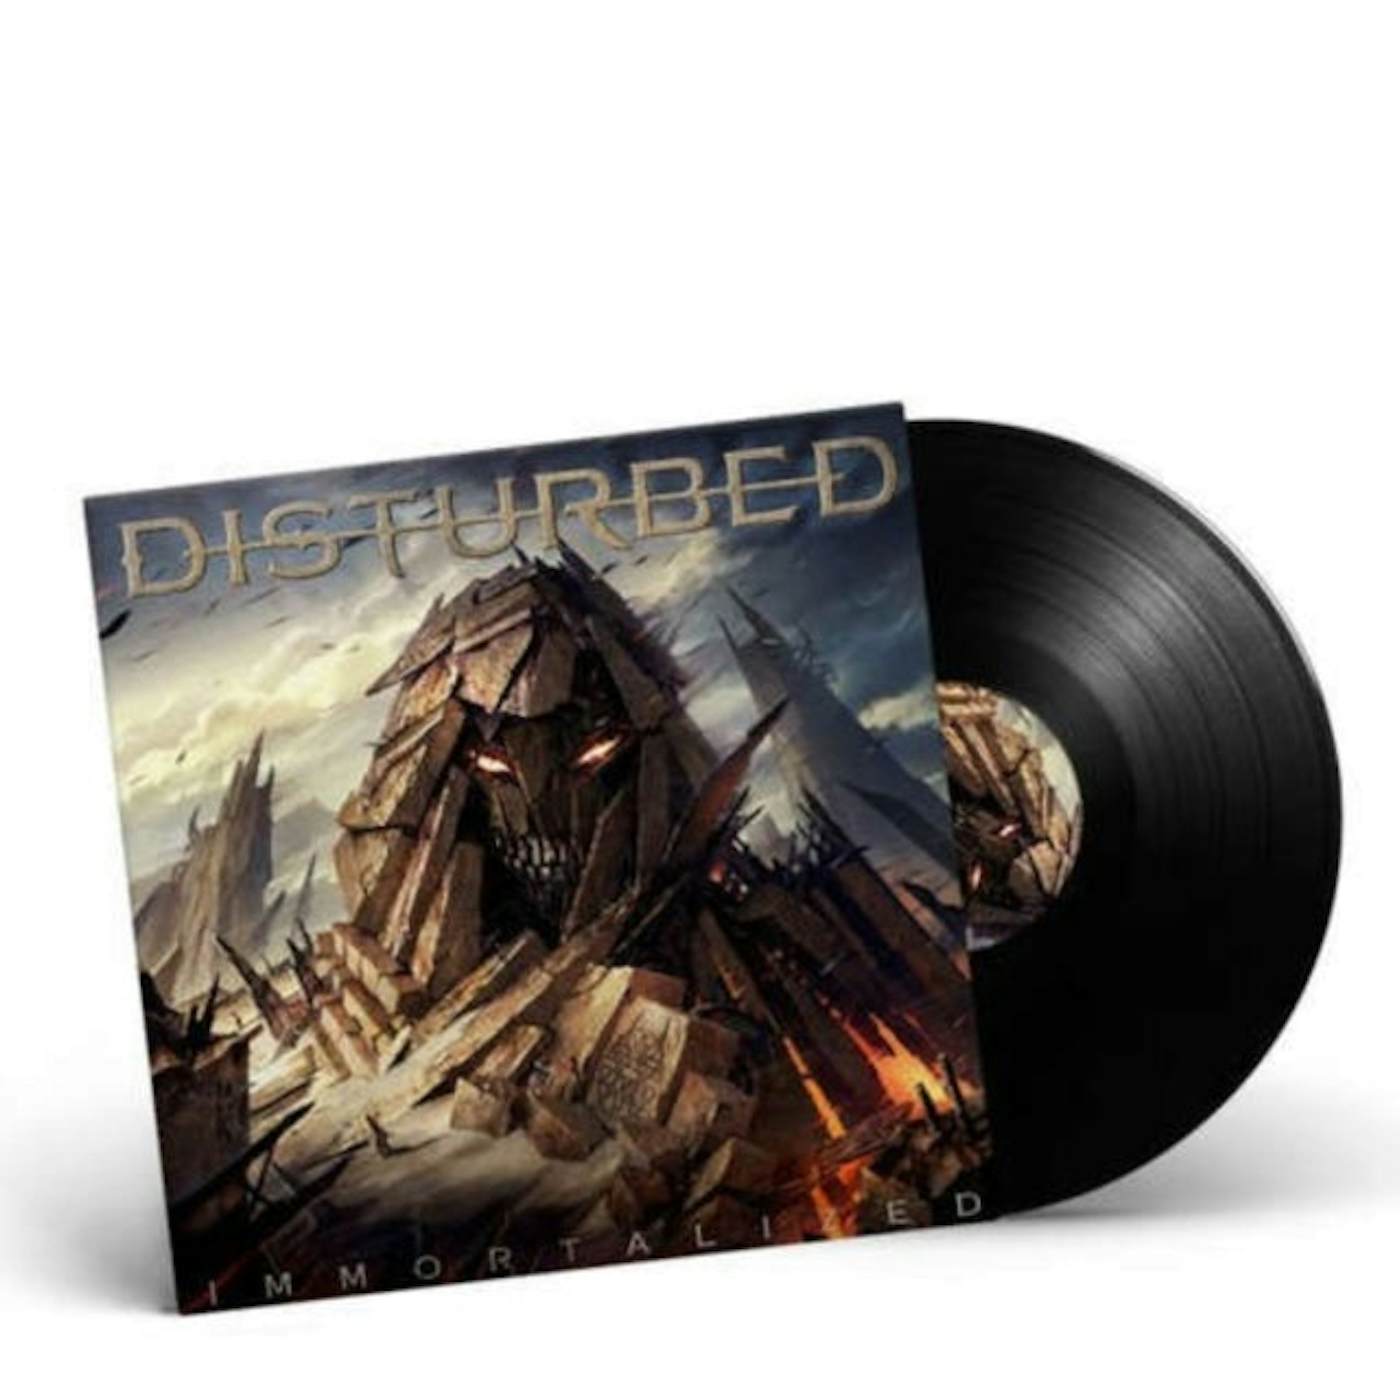 Disturbed LP Vinyl Record - Immortalized